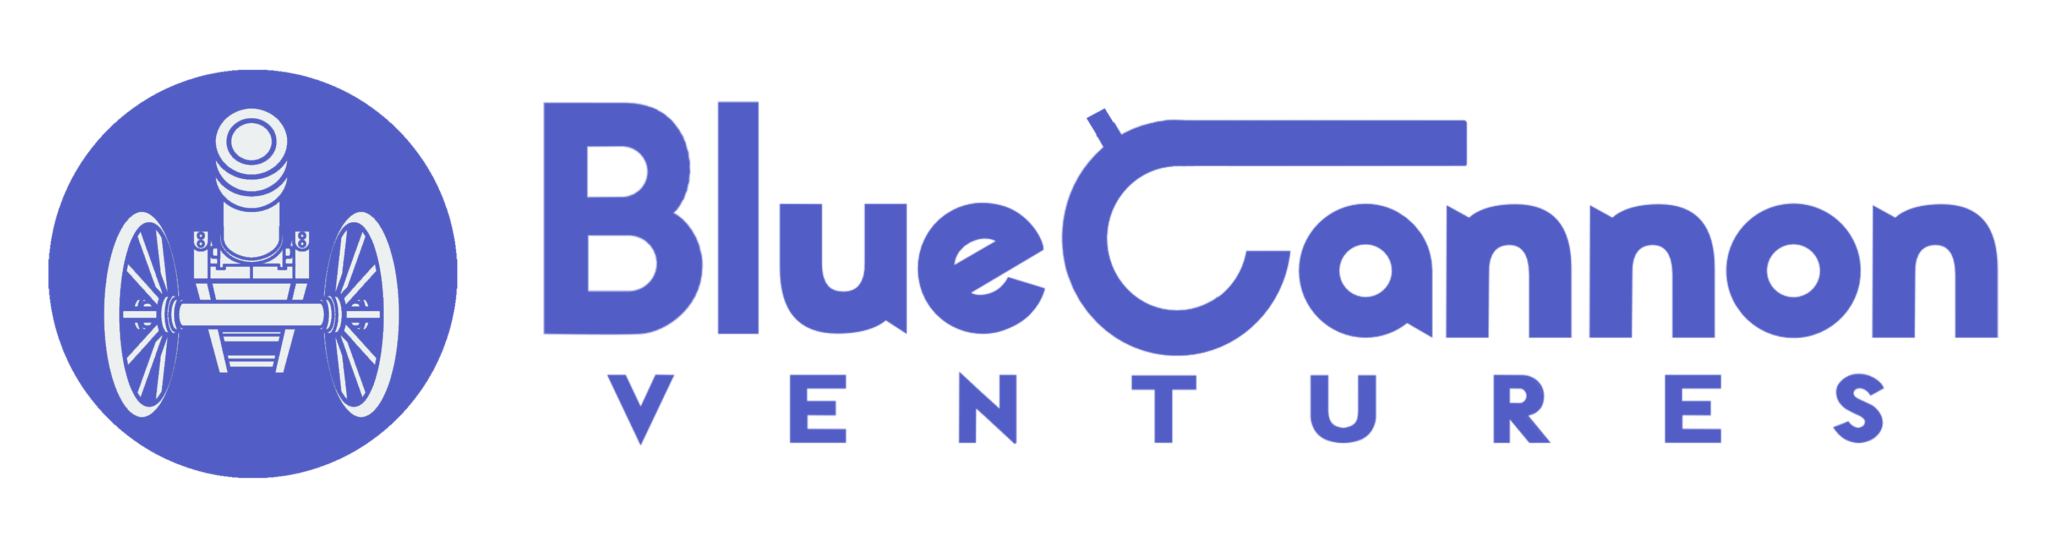 Bluecannon Ventures Logo